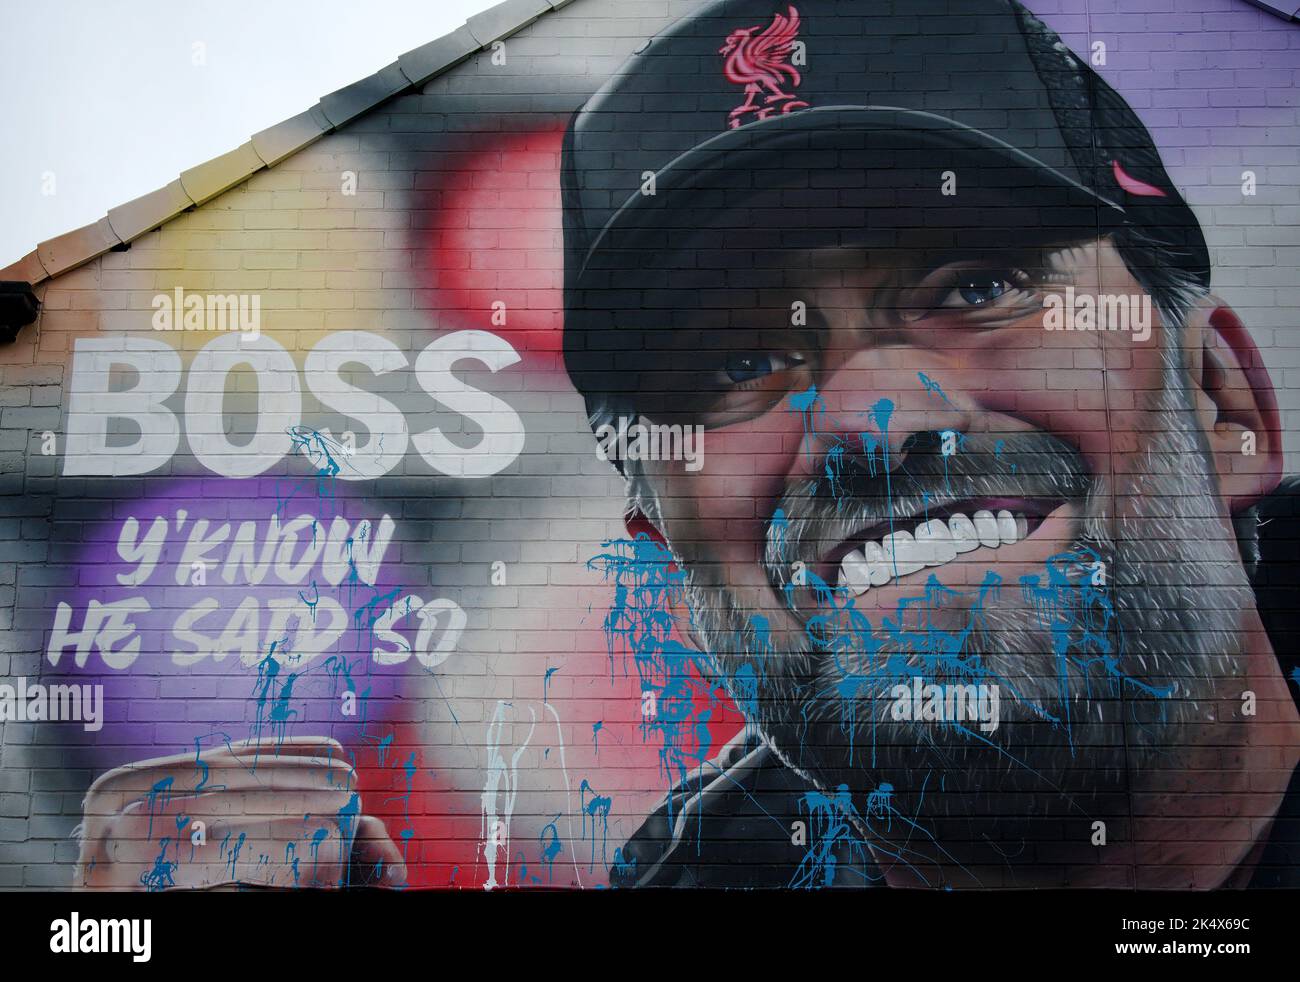 Un mural del gerente de Liverpool Jurgen Klopp Liverpool que ha sido desfigurado. Fecha de la foto: Martes 4 de octubre de 2022. Foto de stock